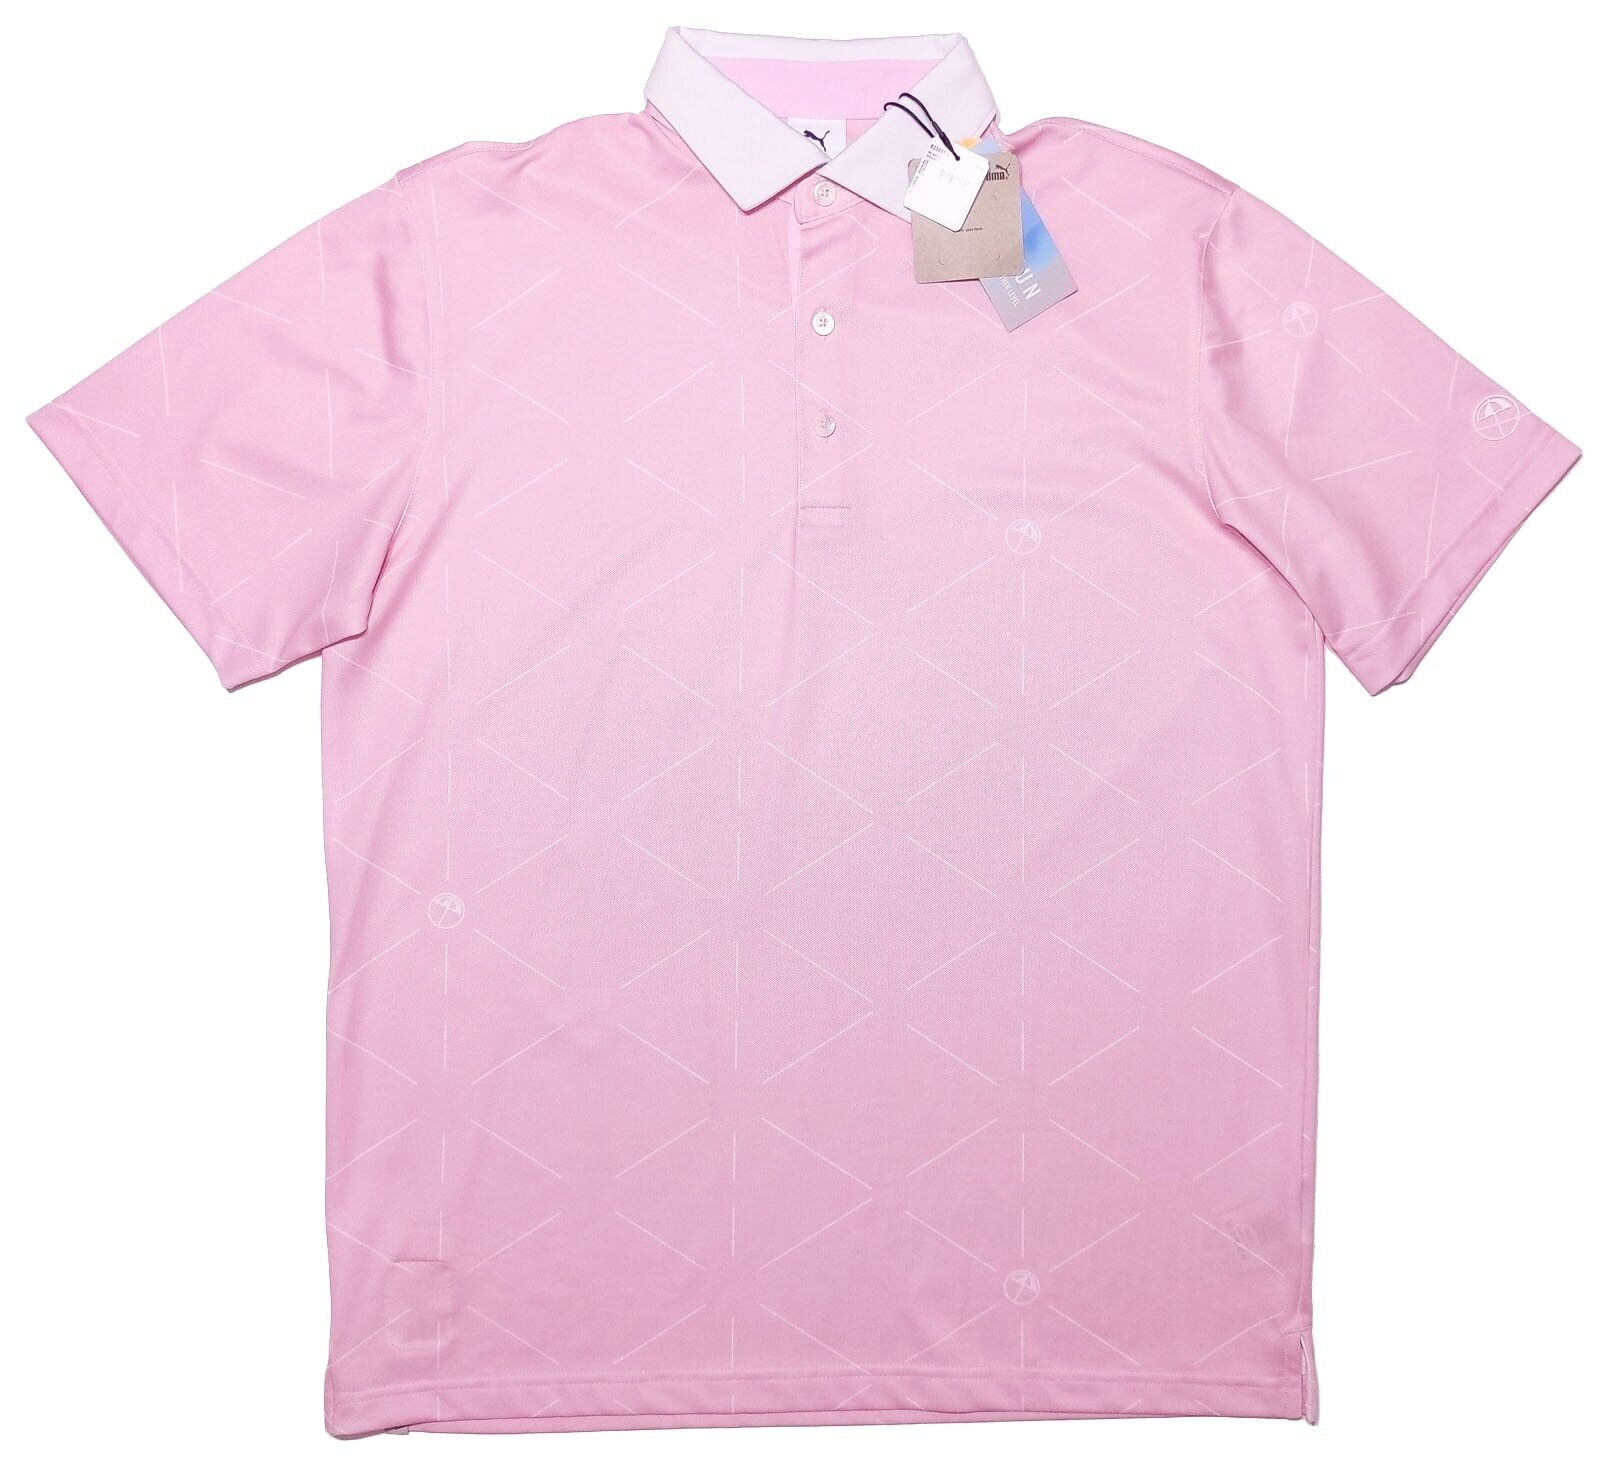 PUMA GOLF Arnold Palmer Performance Polo Shirt Pale Pink Lines Medium M ~ New